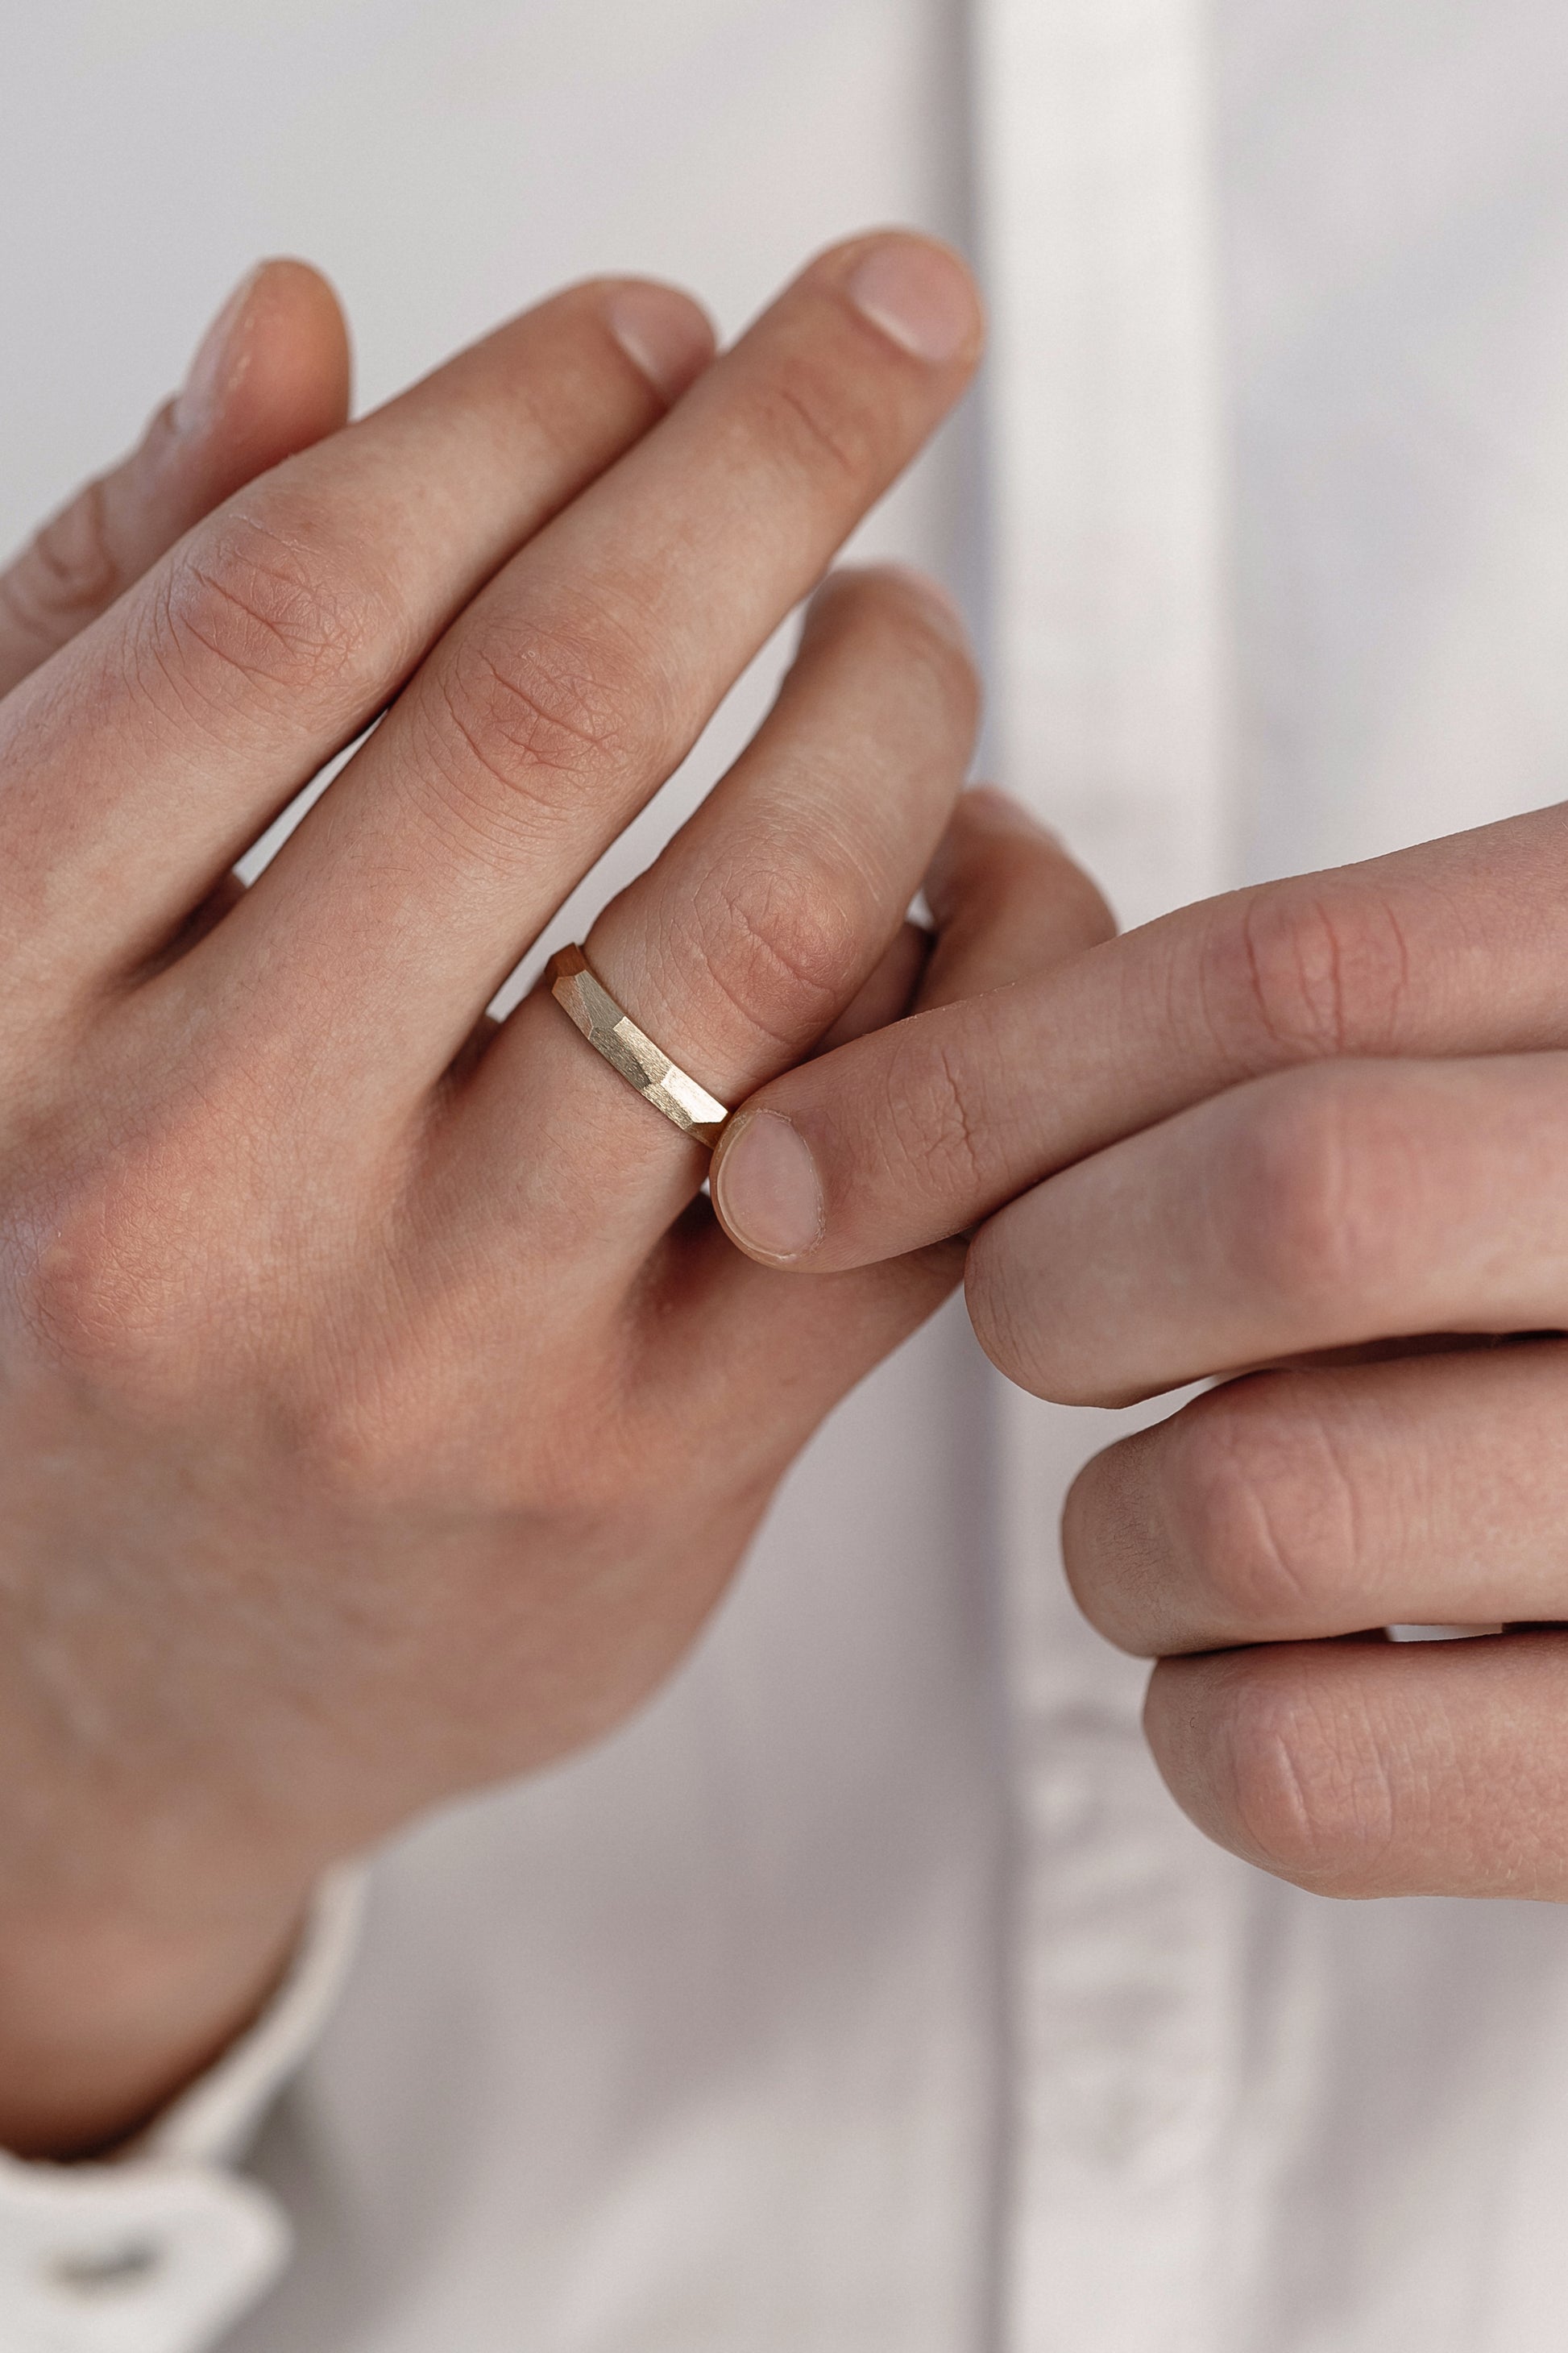 Couple wedding bands. Unique wedding rings. Facette wedding bands. Gold wedding rings set. His and hers wedding bands. Matching wedding rings set.